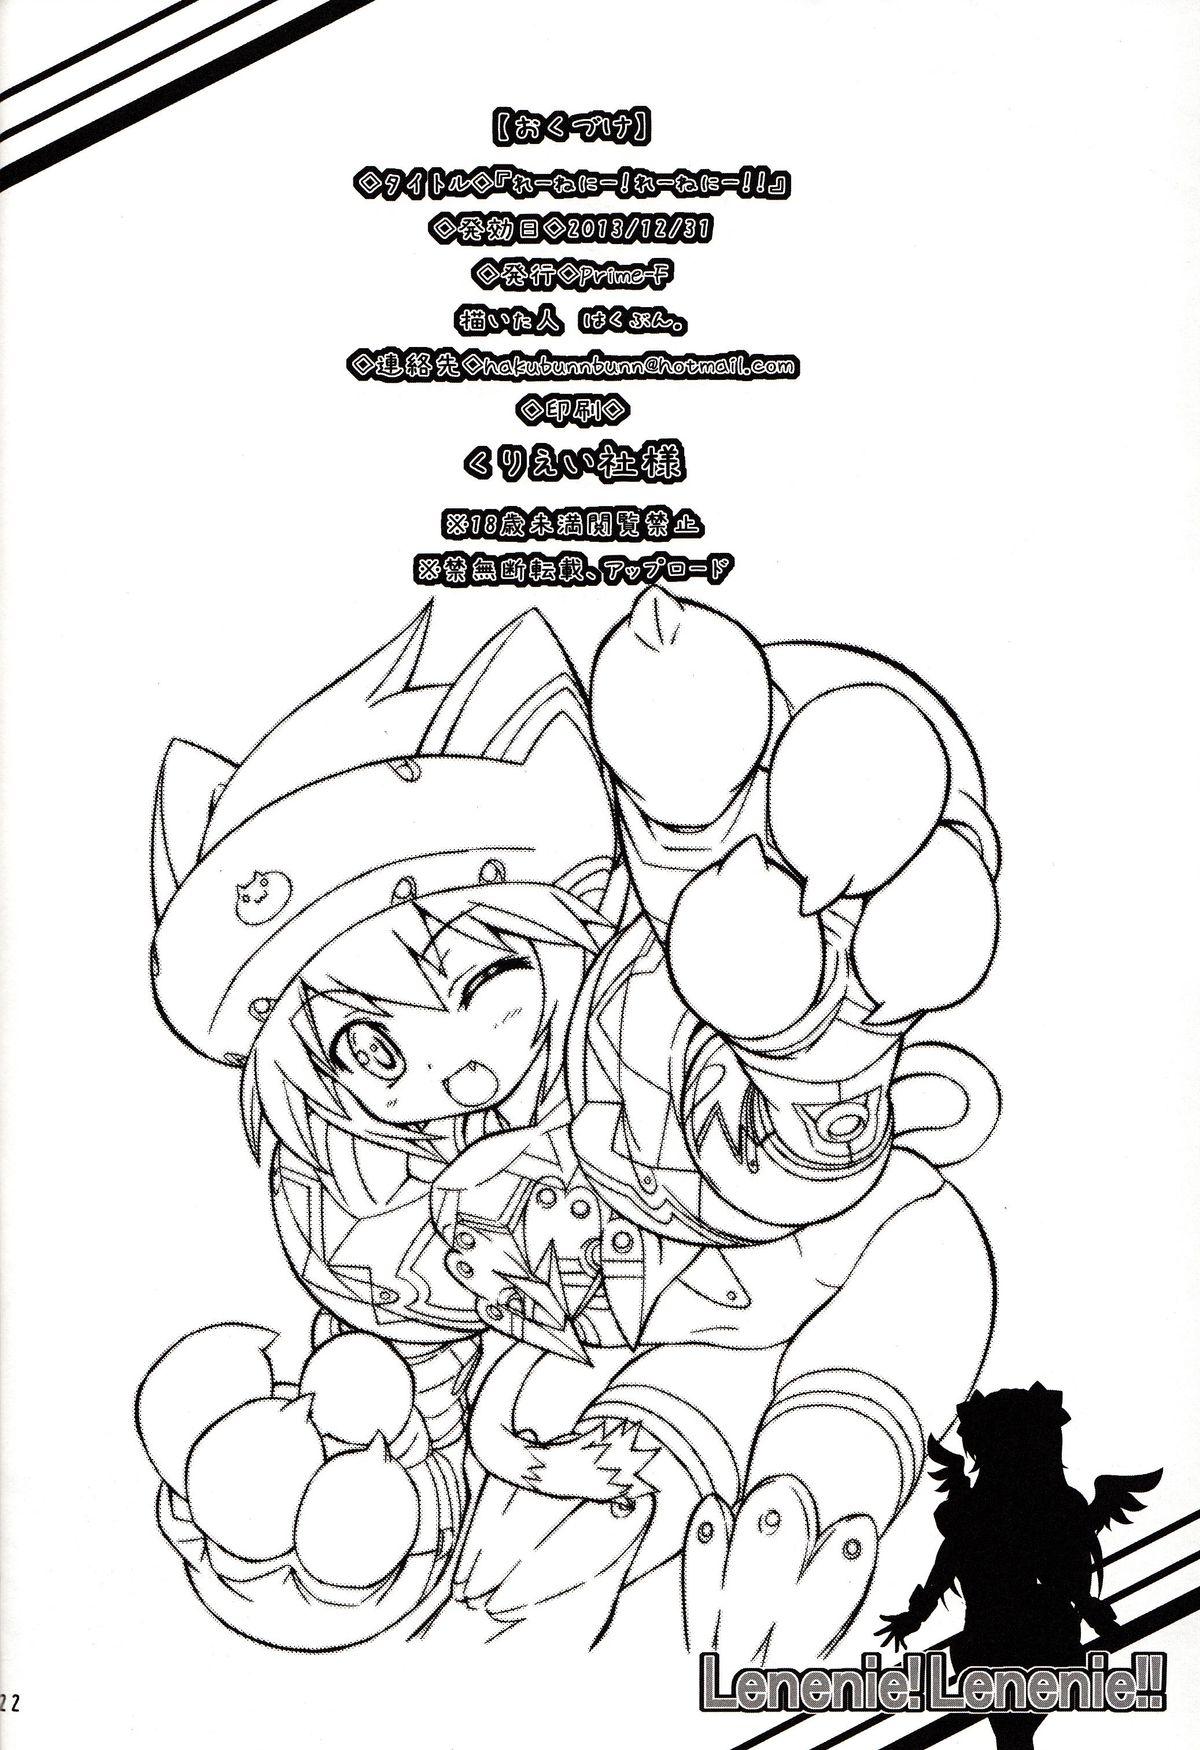 Camgirl Lenenie! Lenenie!! - Busou shinki Strip - Page 21